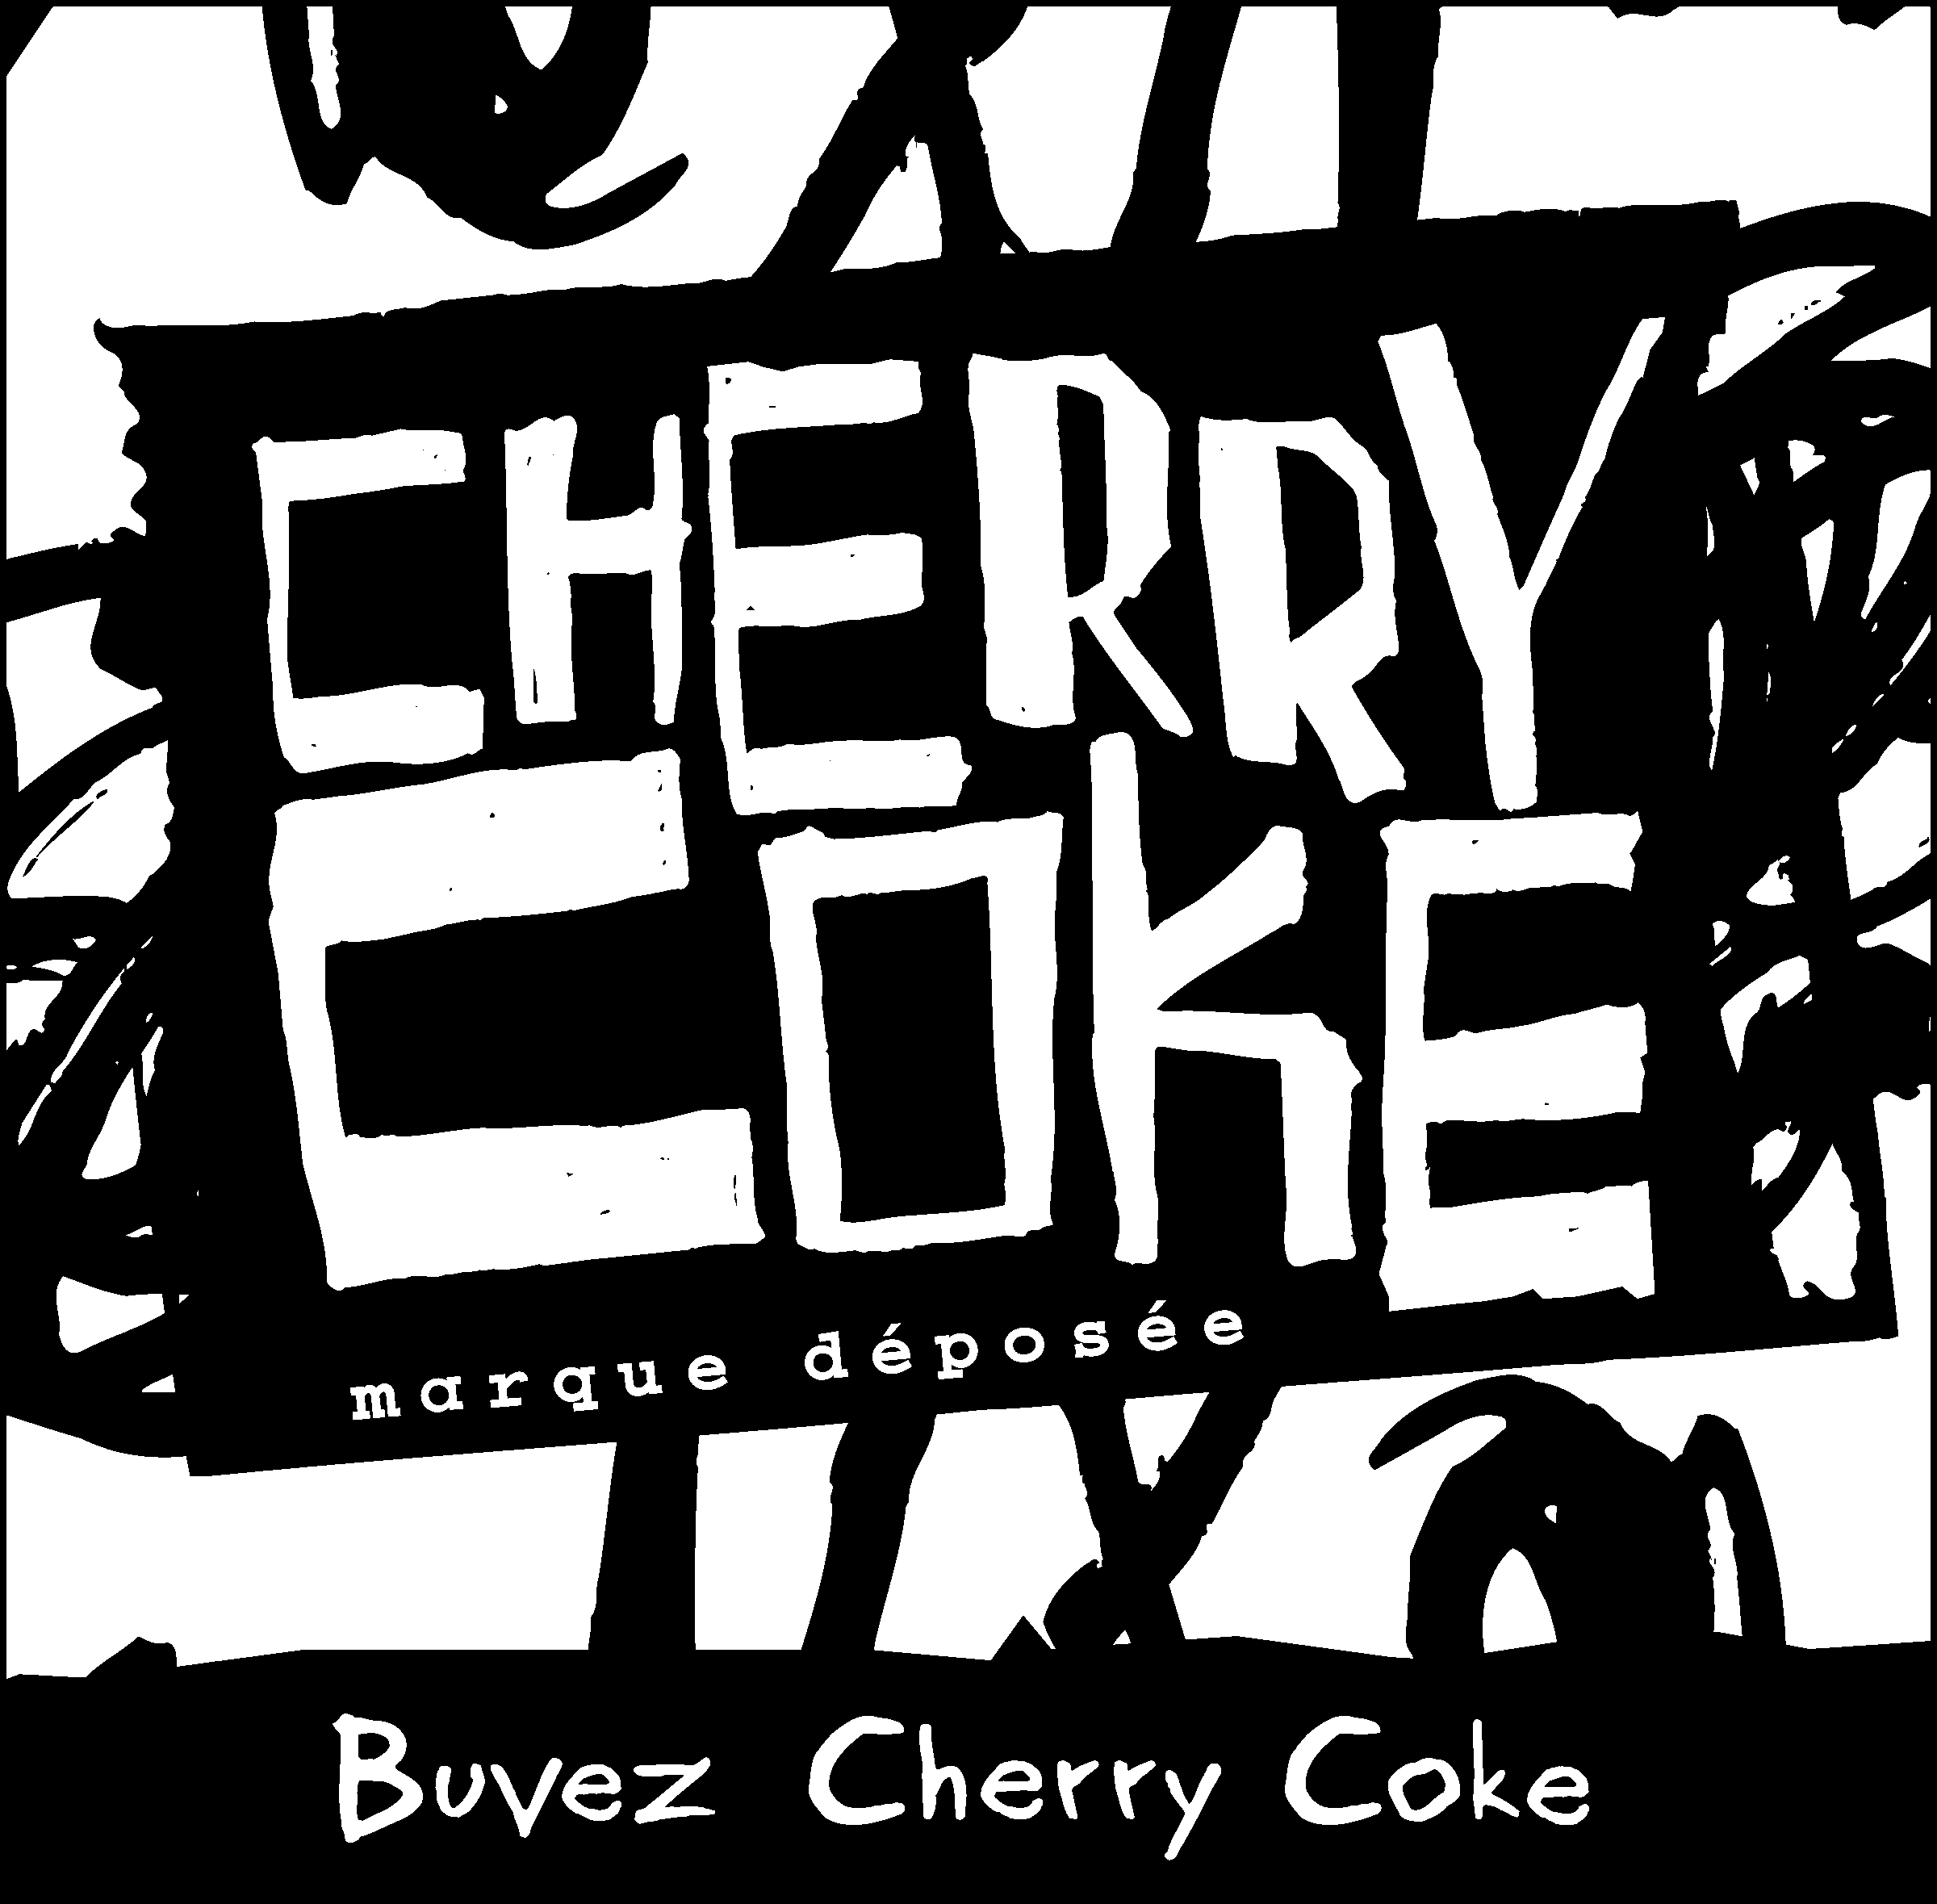 Cherry Coke Logo - Cherry Coke Logo PNG Transparent & SVG Vector - Freebie Supply